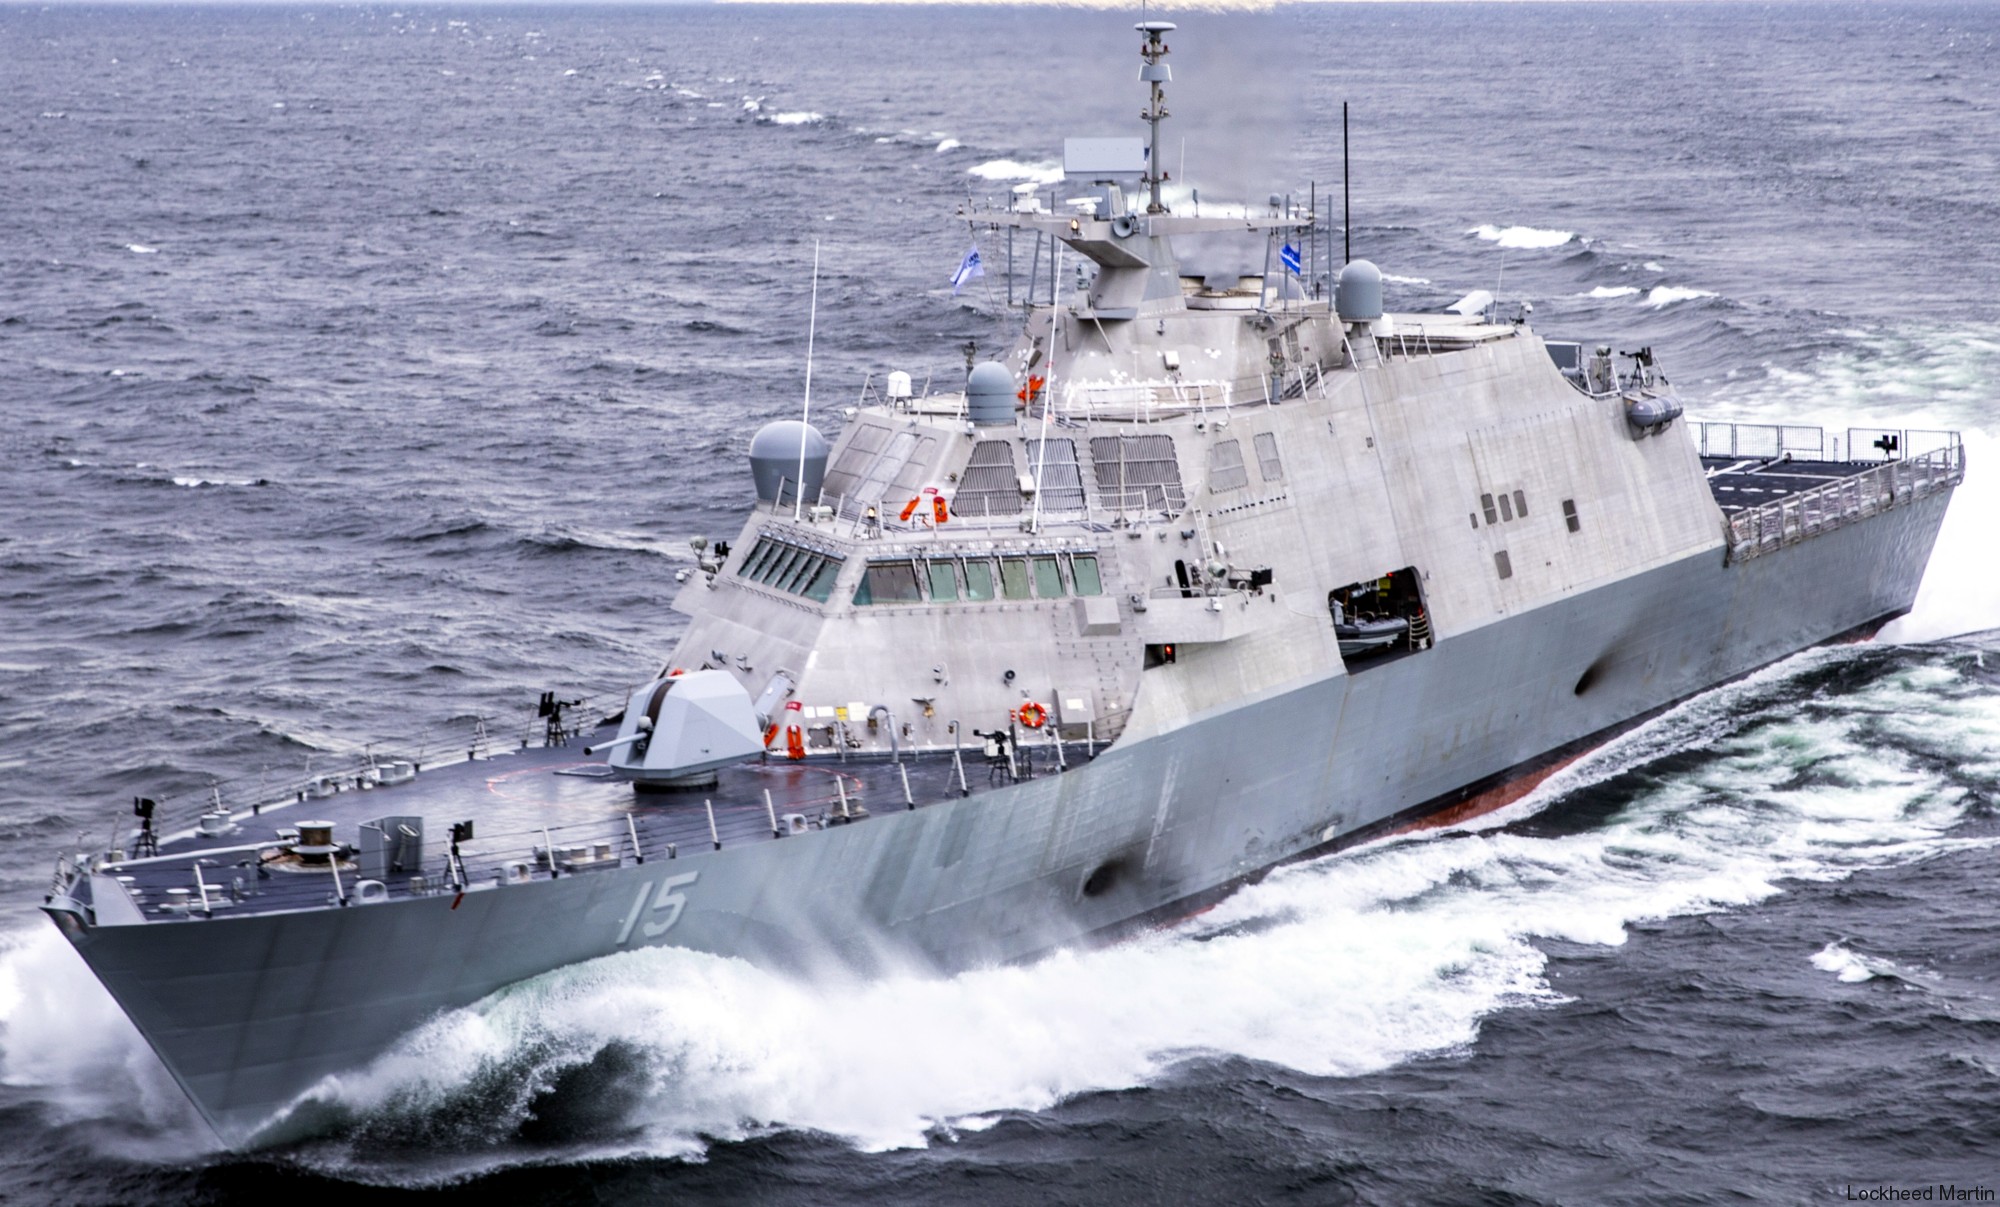 lcs-15 uss billings freedom class littoral combat ship us navy 05 trials lake michigan